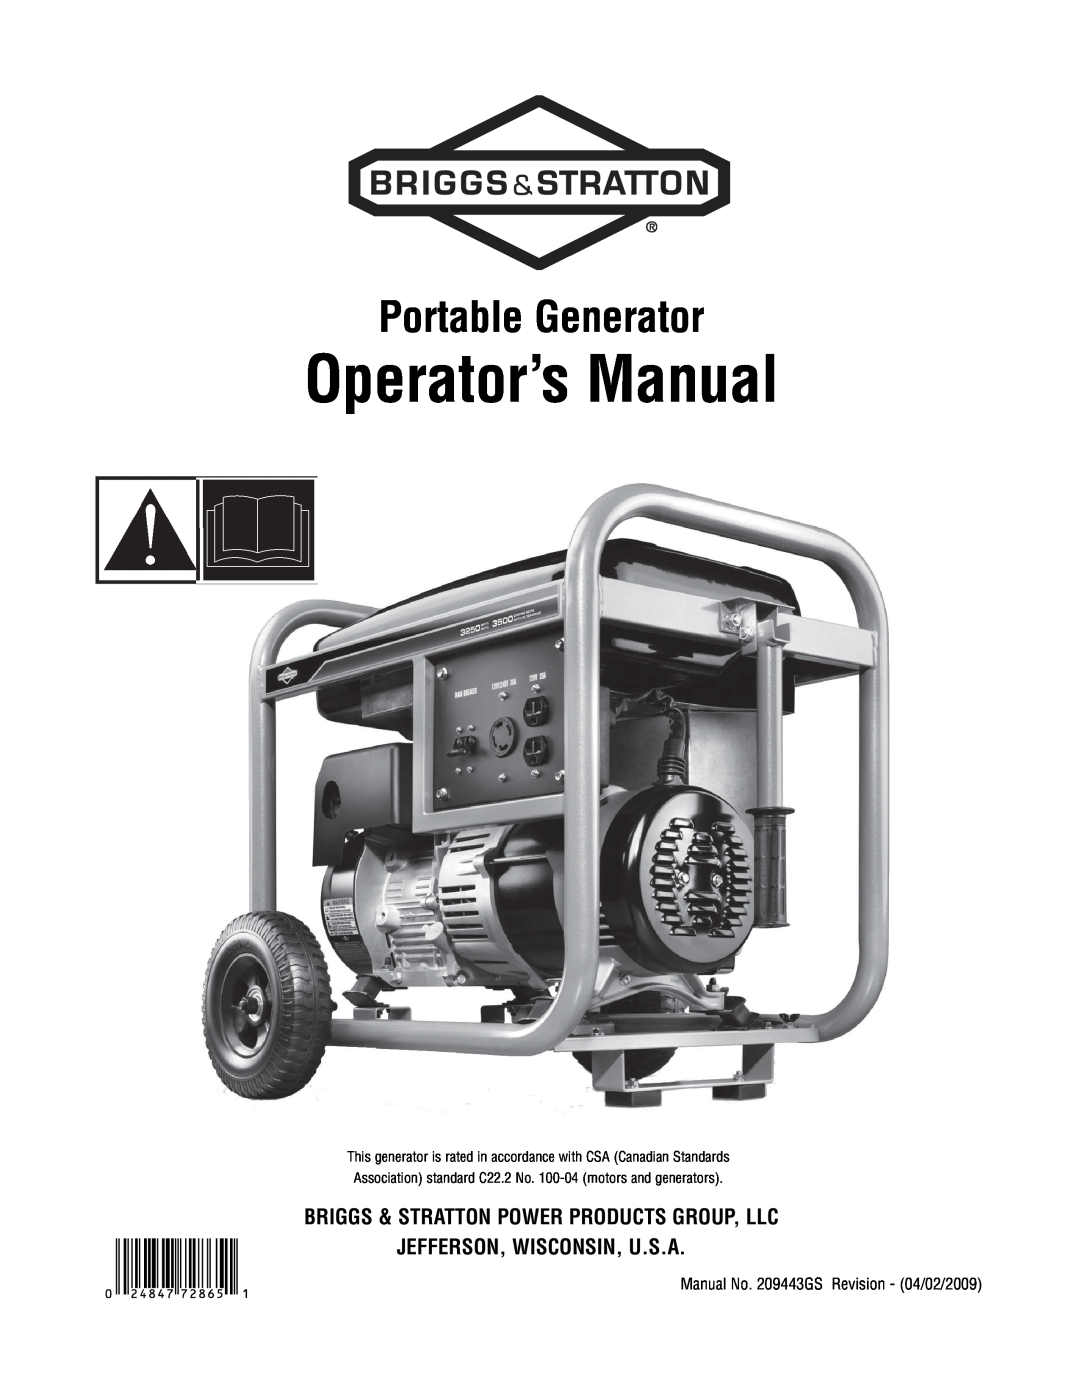 Briggs & Stratton 209443gs manual Operator’s Manual, Portable Generator, Briggs & Stratton Power Products Group, Llc 